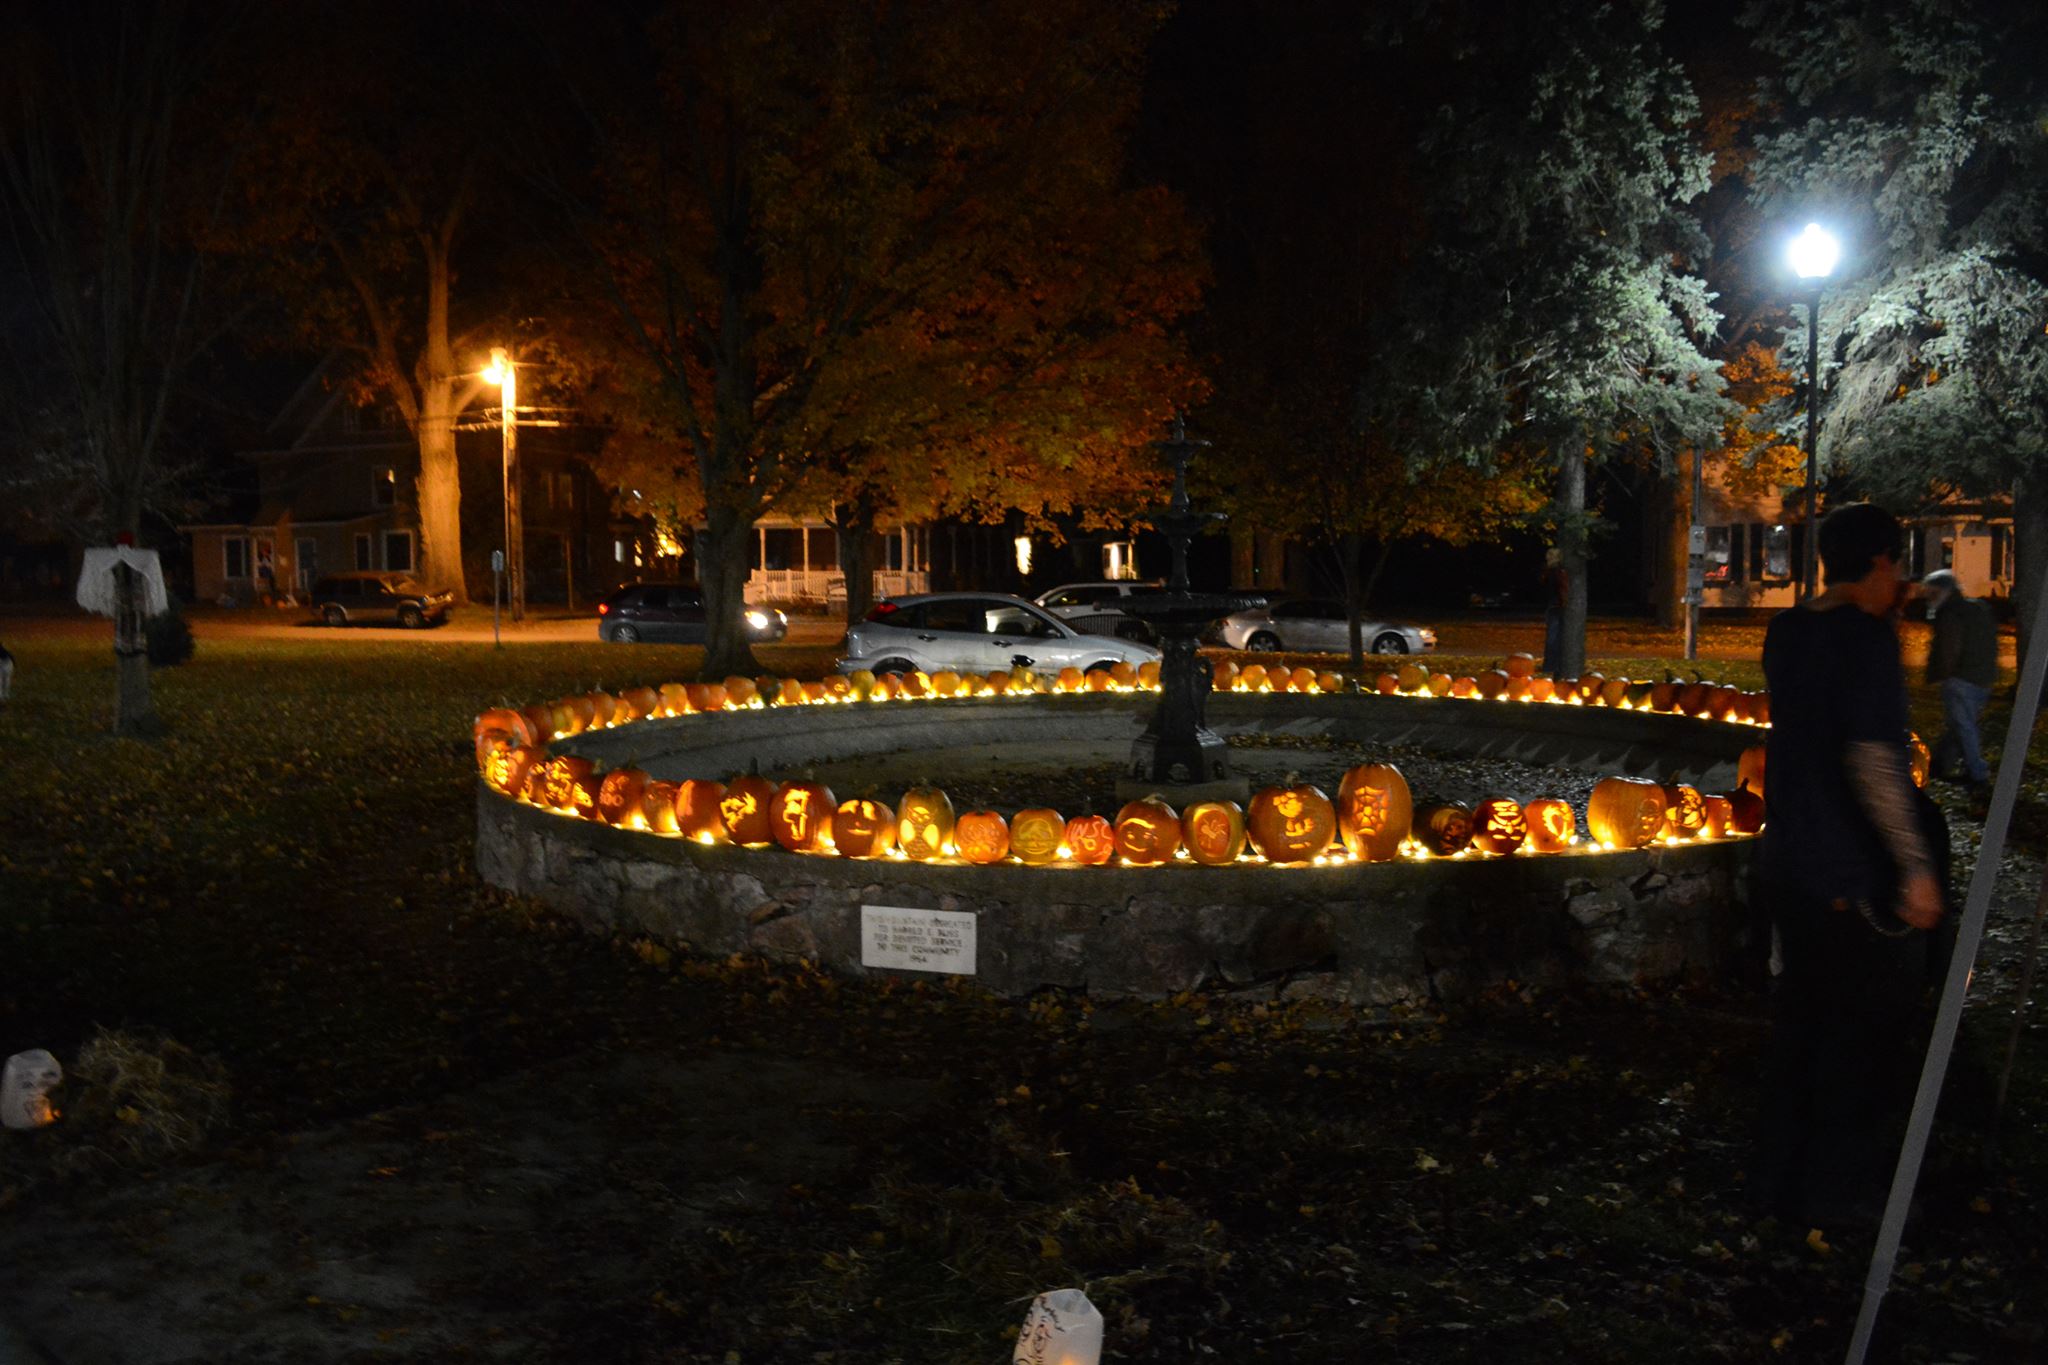 pumplin display in swanton park at night